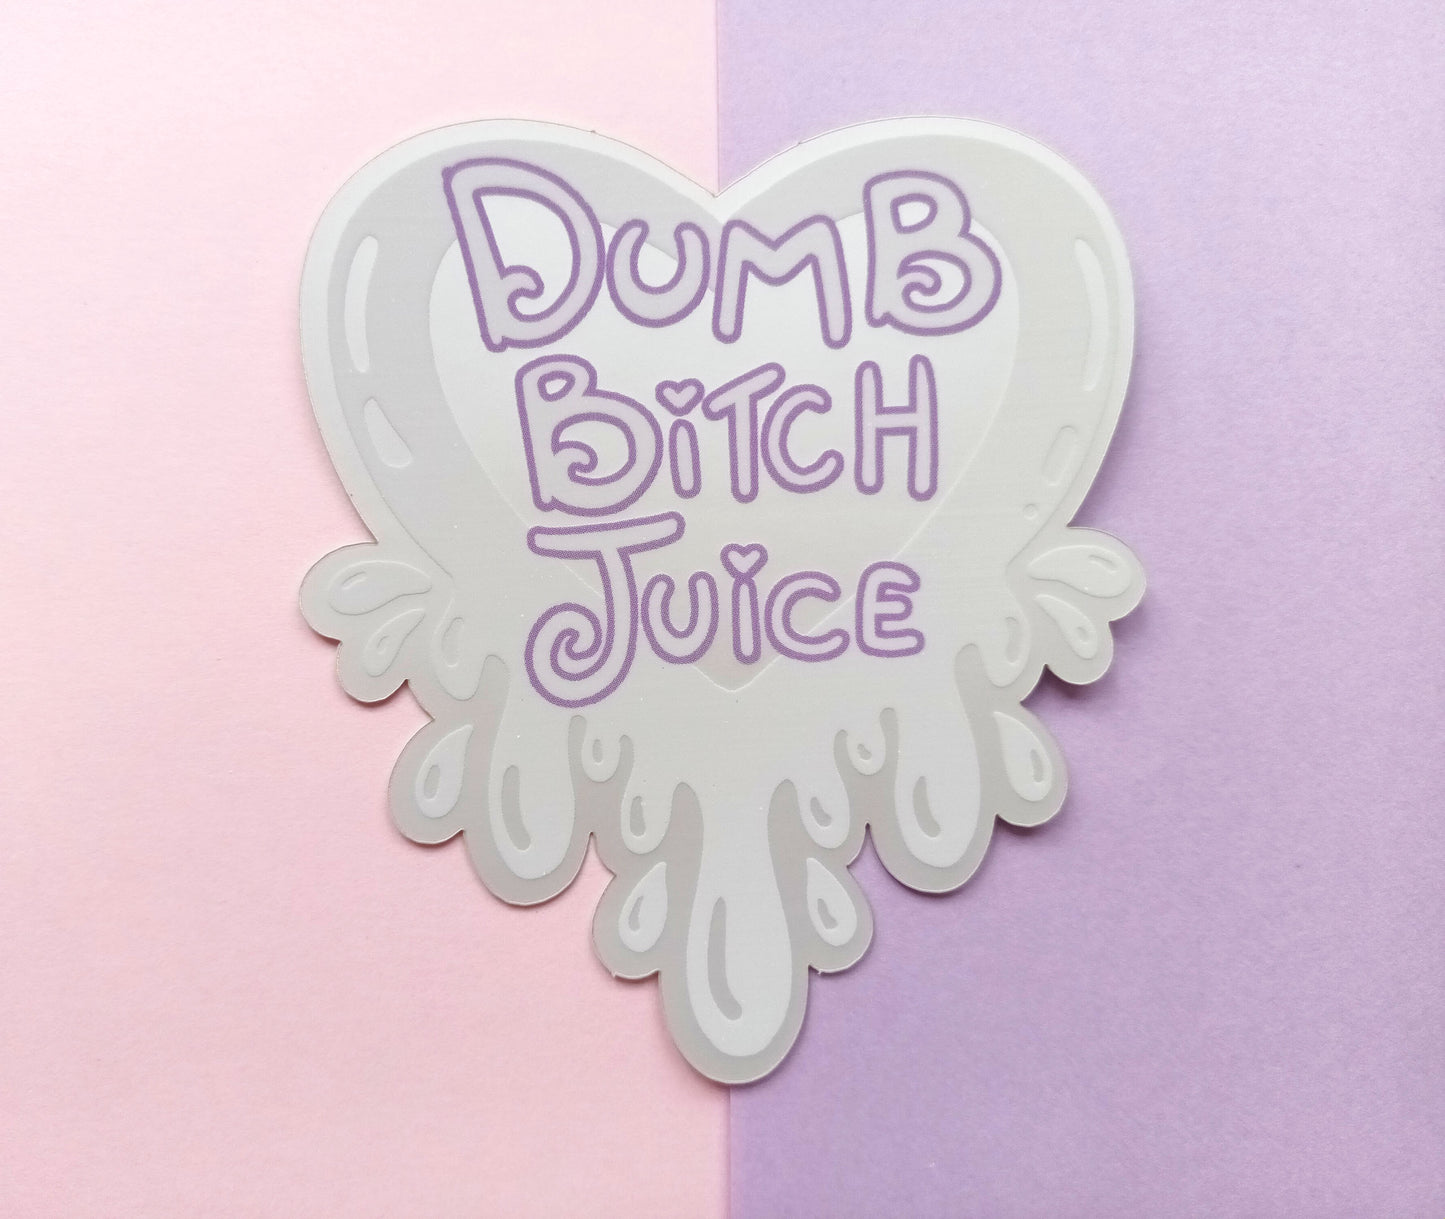 Matte Mirror Dumb Bitch Juice Sticker